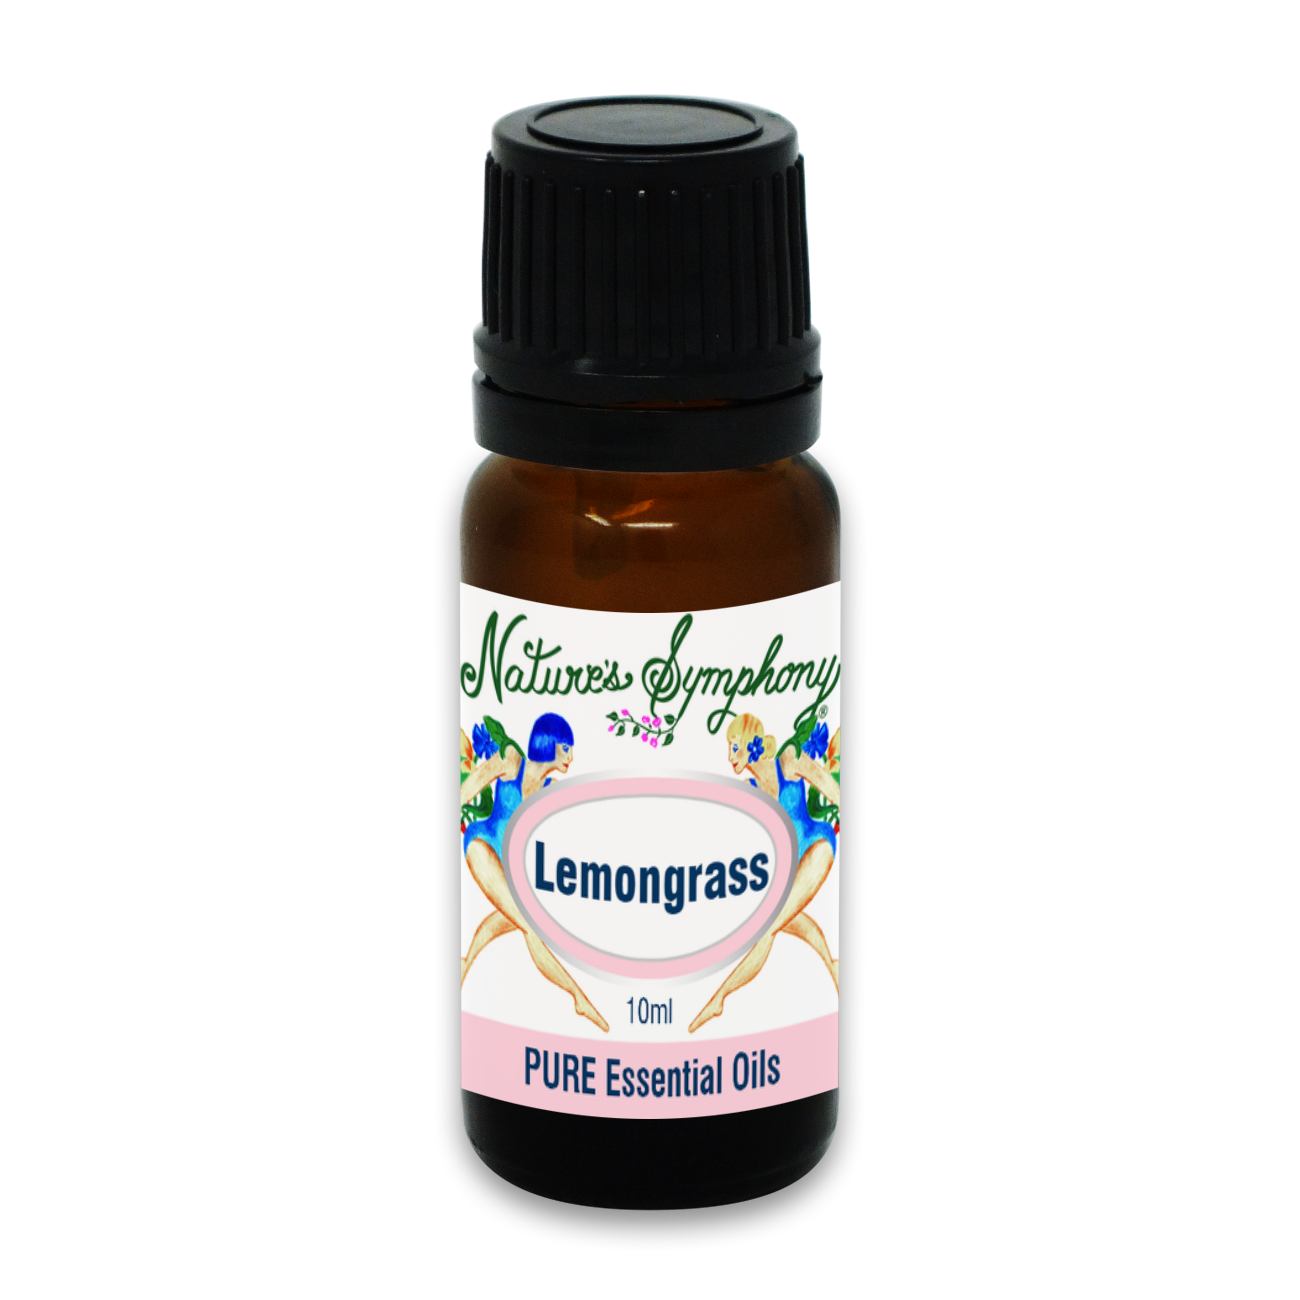 Lemongrass, Ambiance Diffusion oil - 10ml